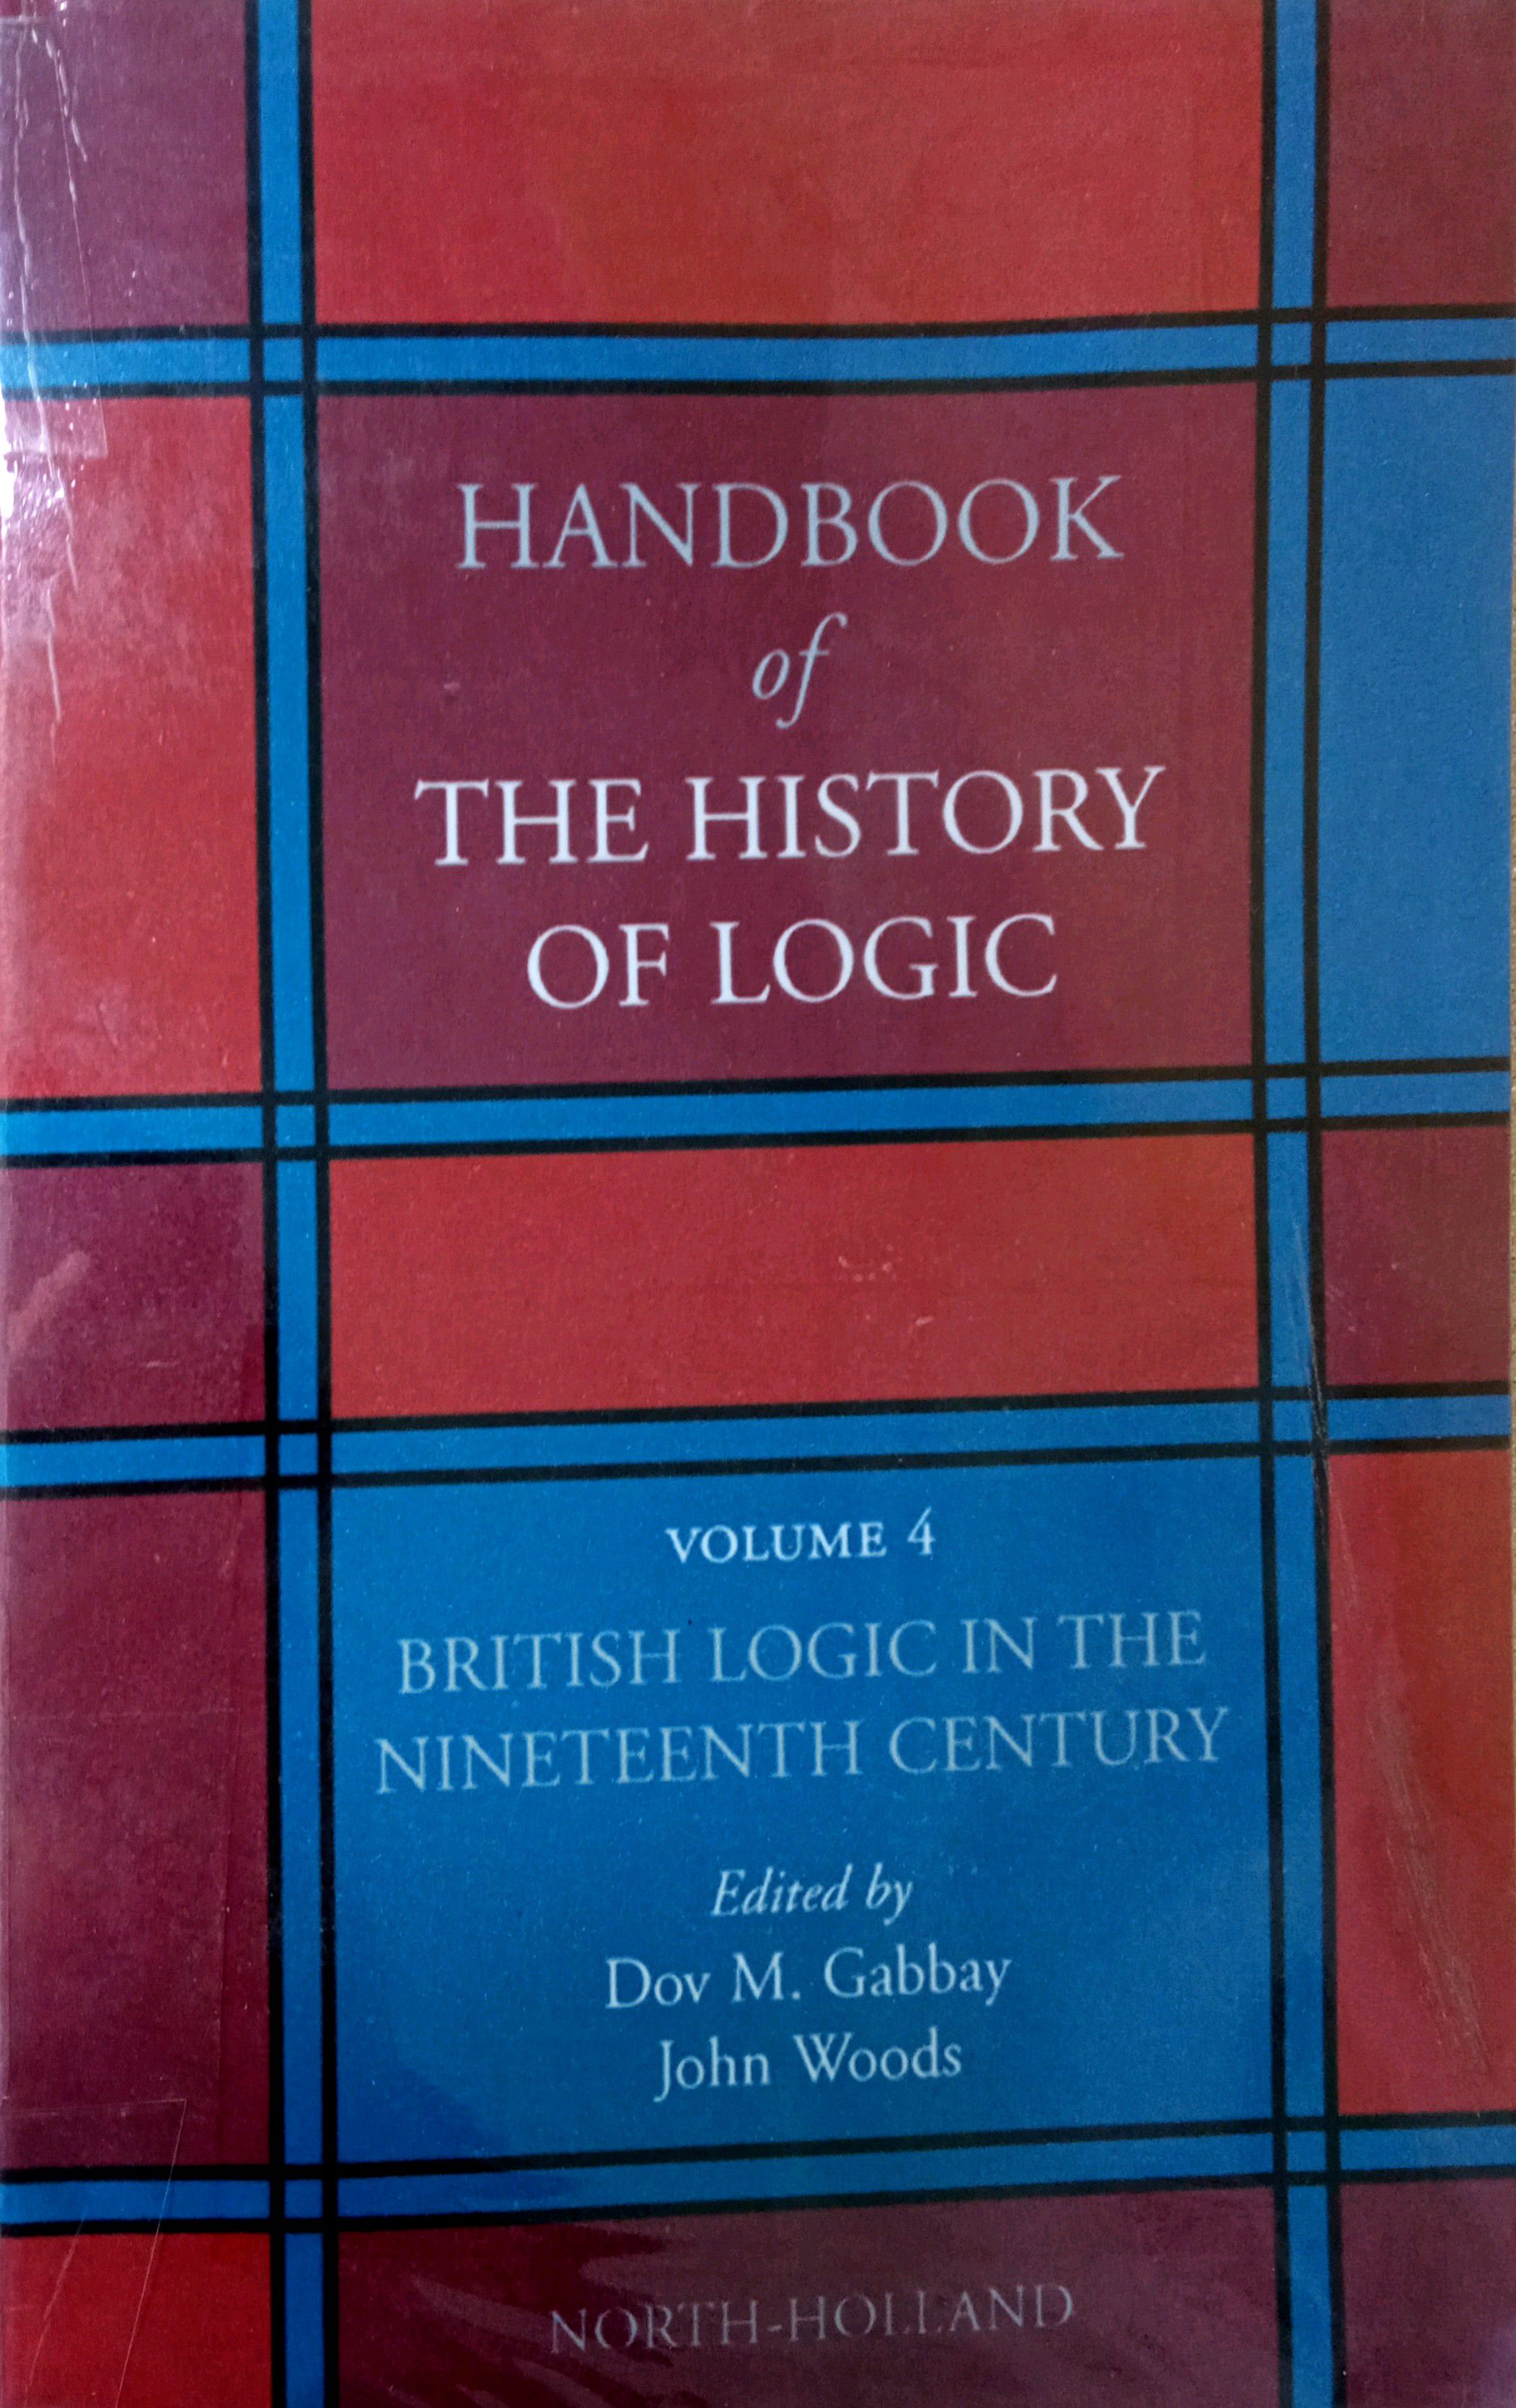 HANDBOOK OF THE HISTORY OF LOGIC